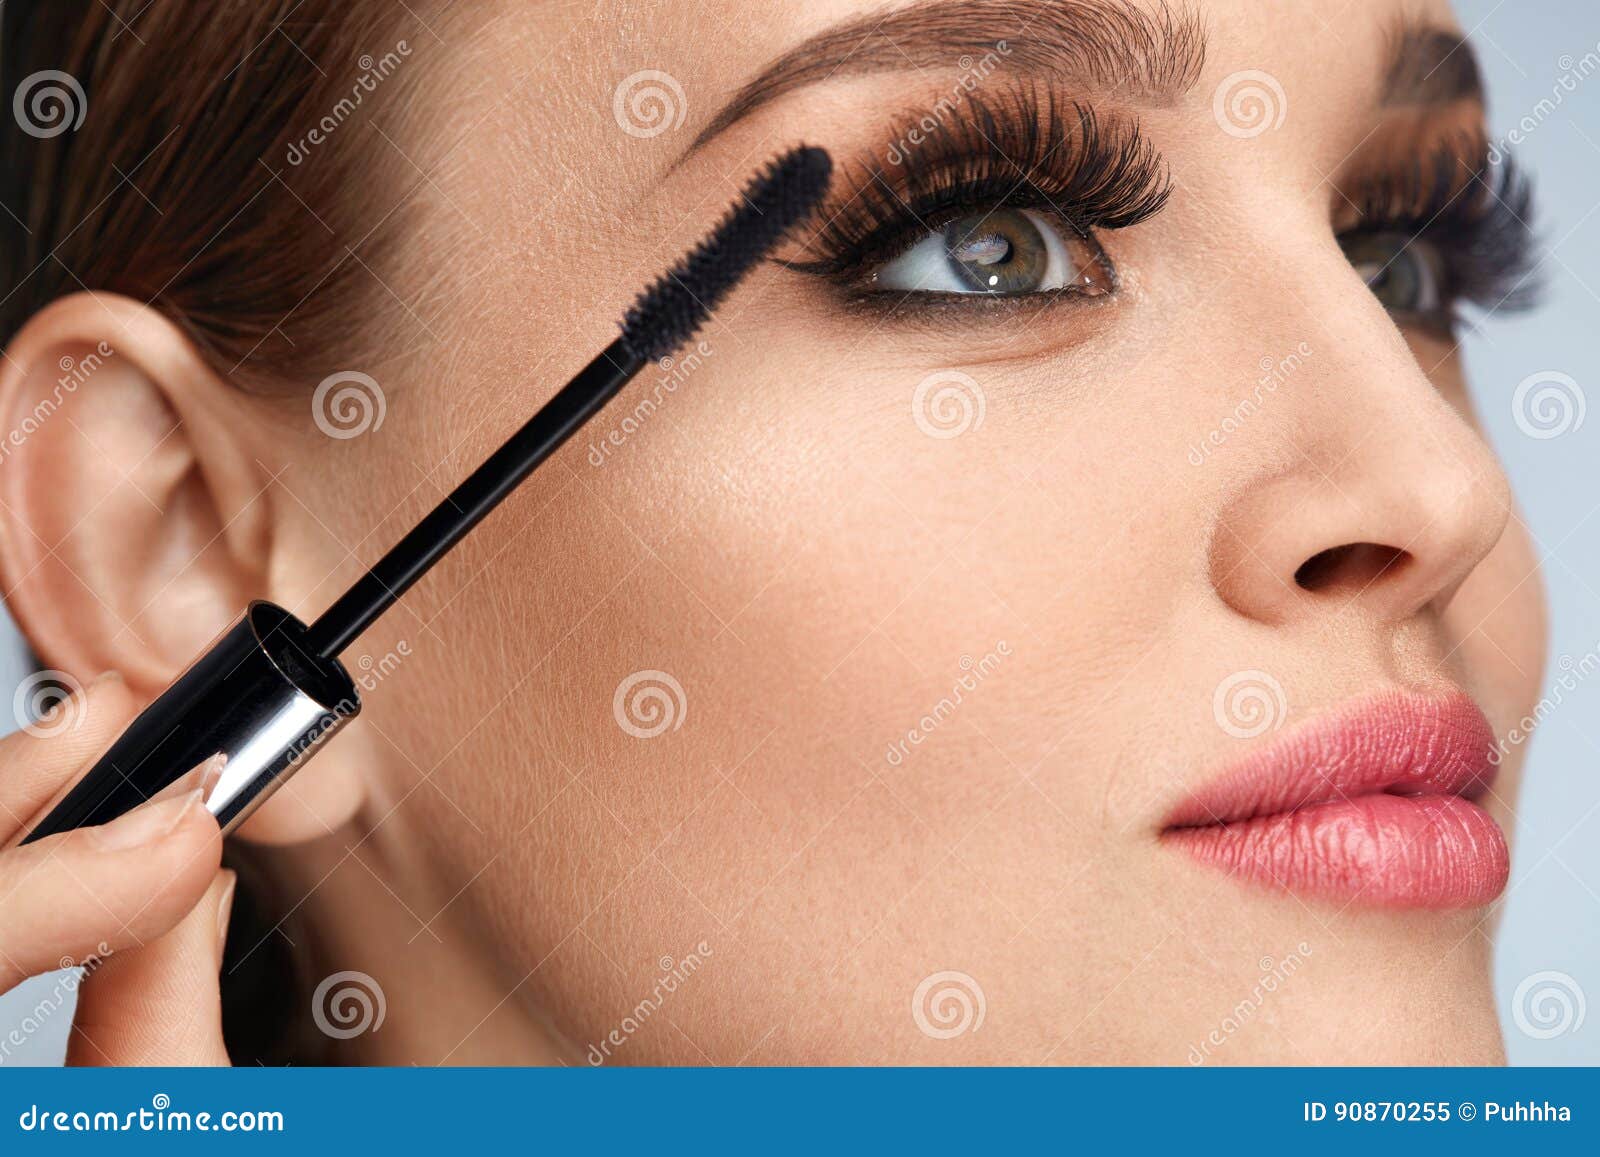 woman with makeup, long eyelashes applying mascara. doing makeup